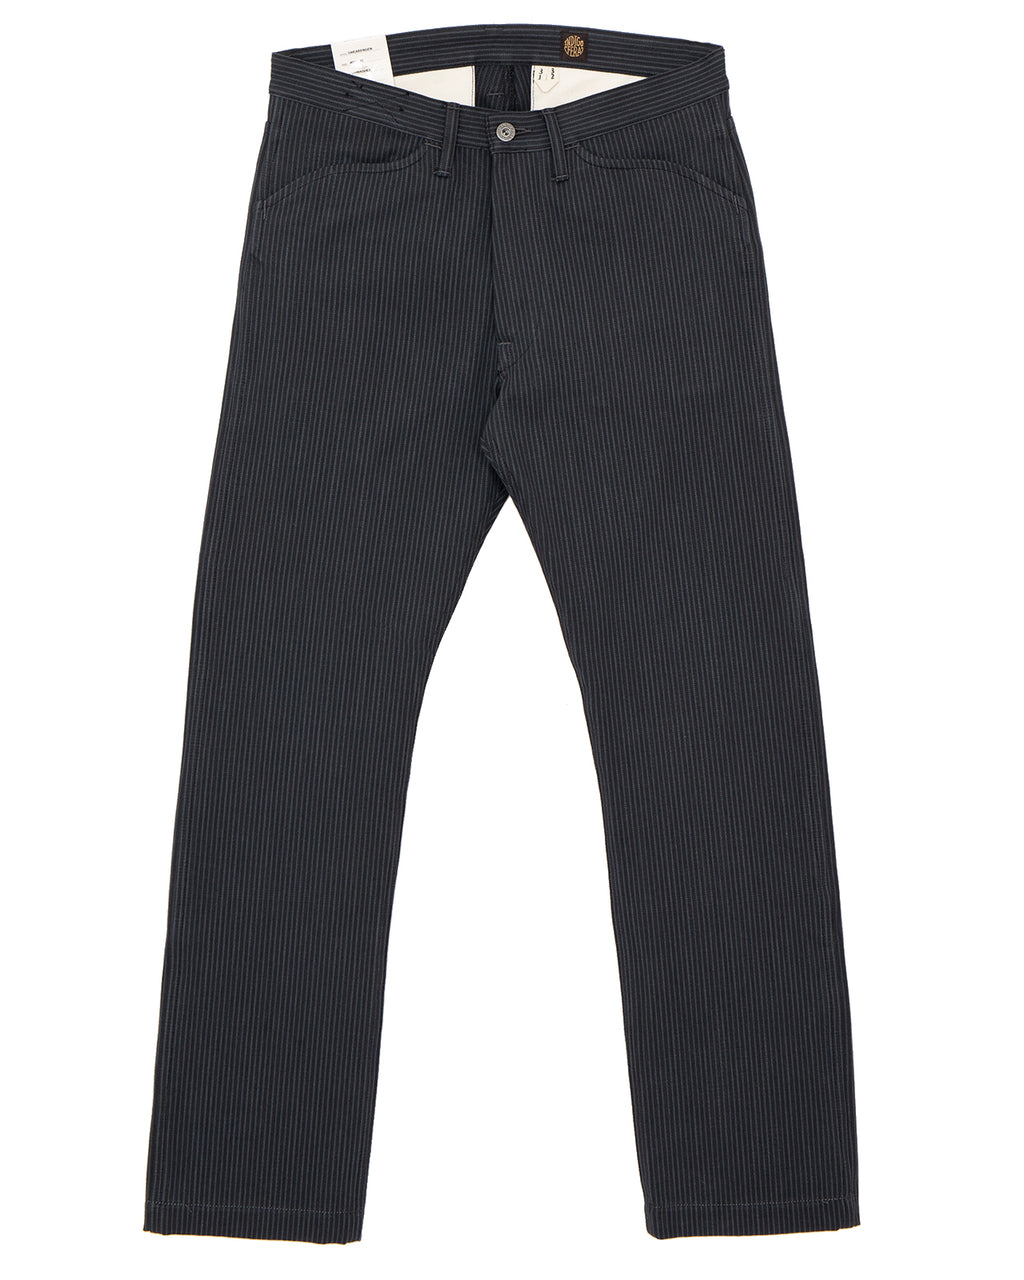 Indigofera Jeans - Panchoandlefty.se – Pancho And Lefty - Online Store